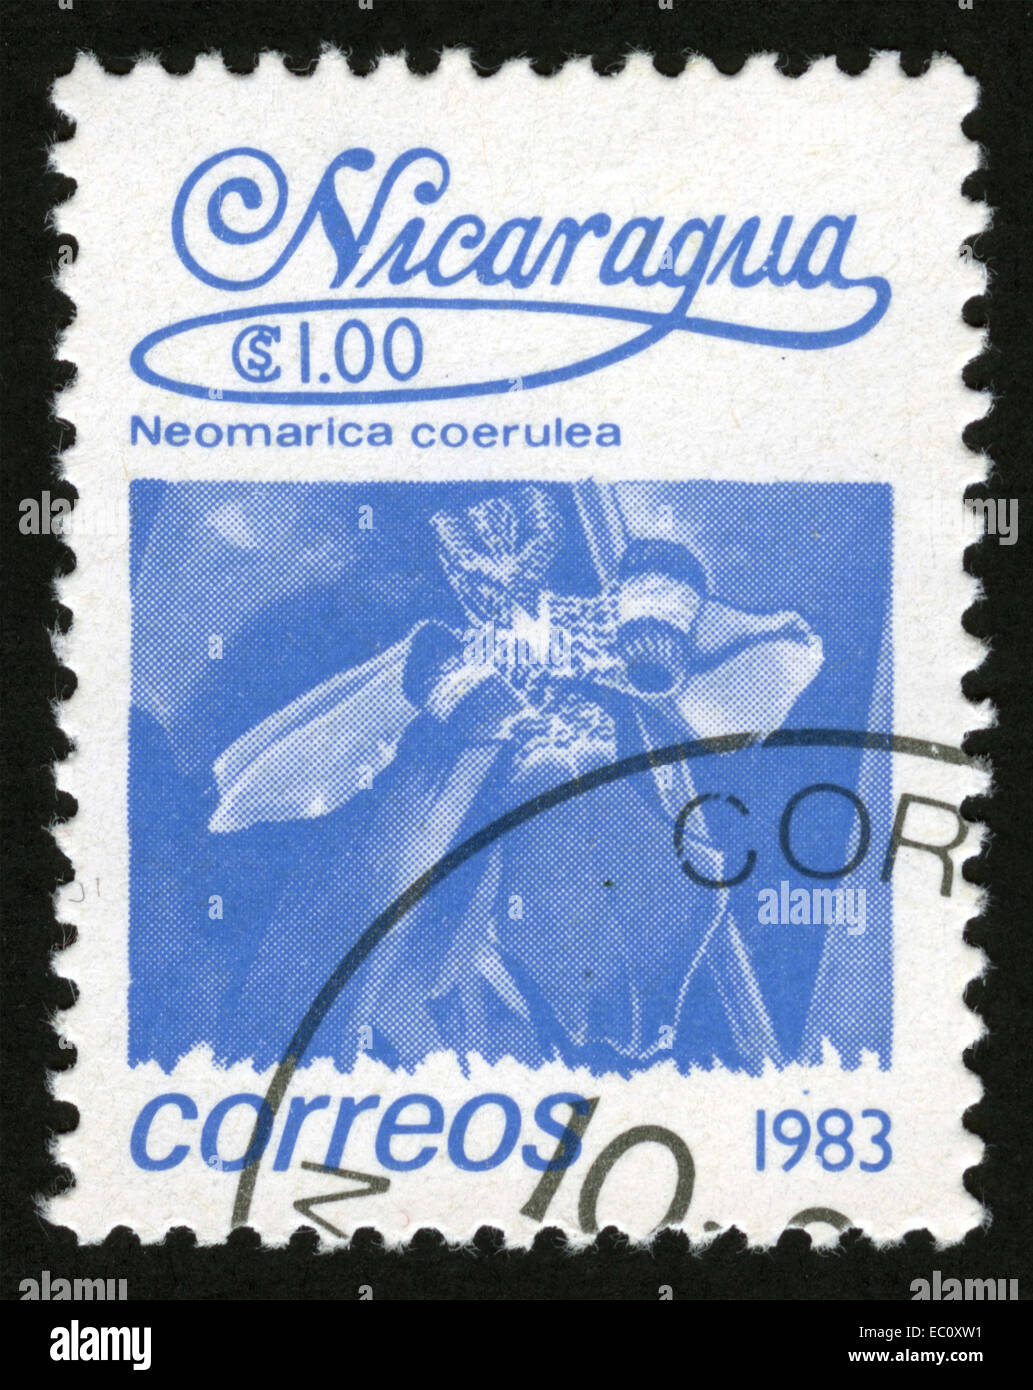 CIRCA : 1983-02-05, Nicaragua, Neomarica coerulea, Bee pollinated flowers, Stock Photo